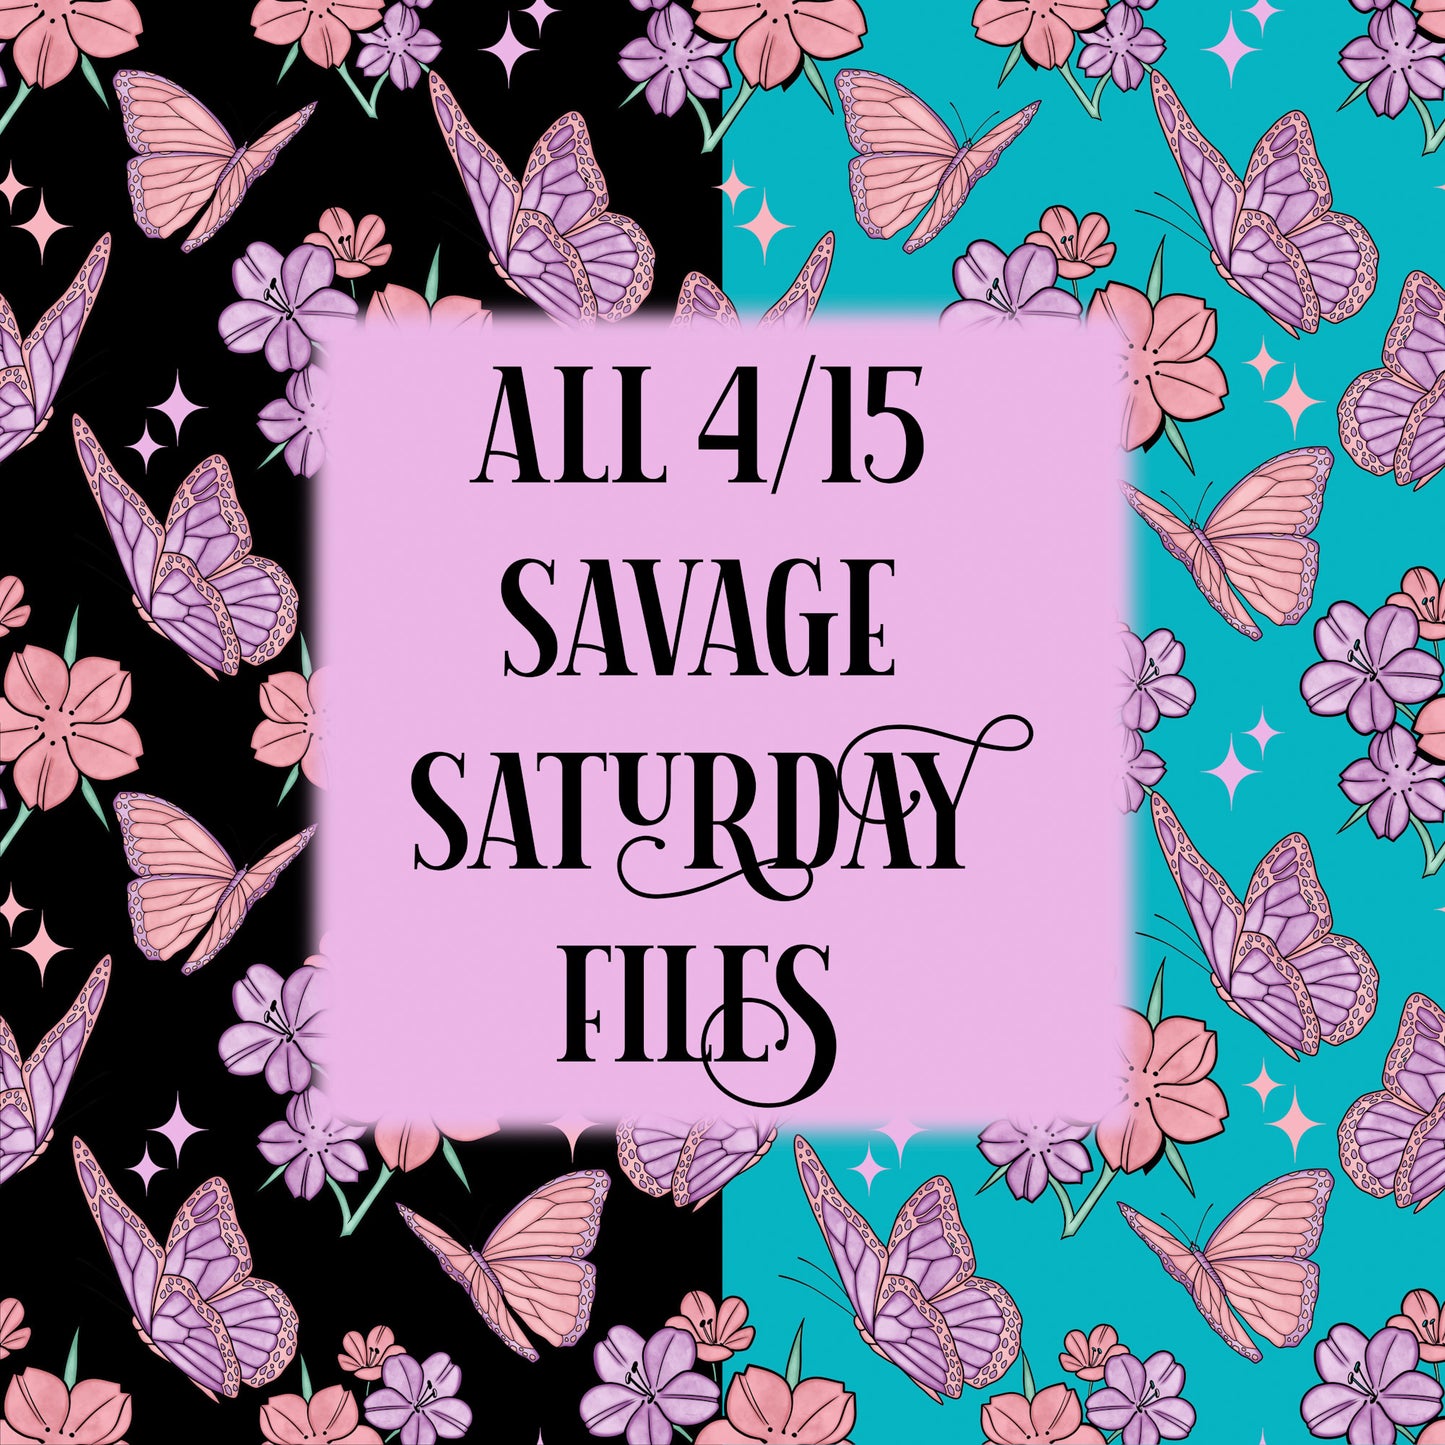 All of 4/15 Savage Saturday designs.